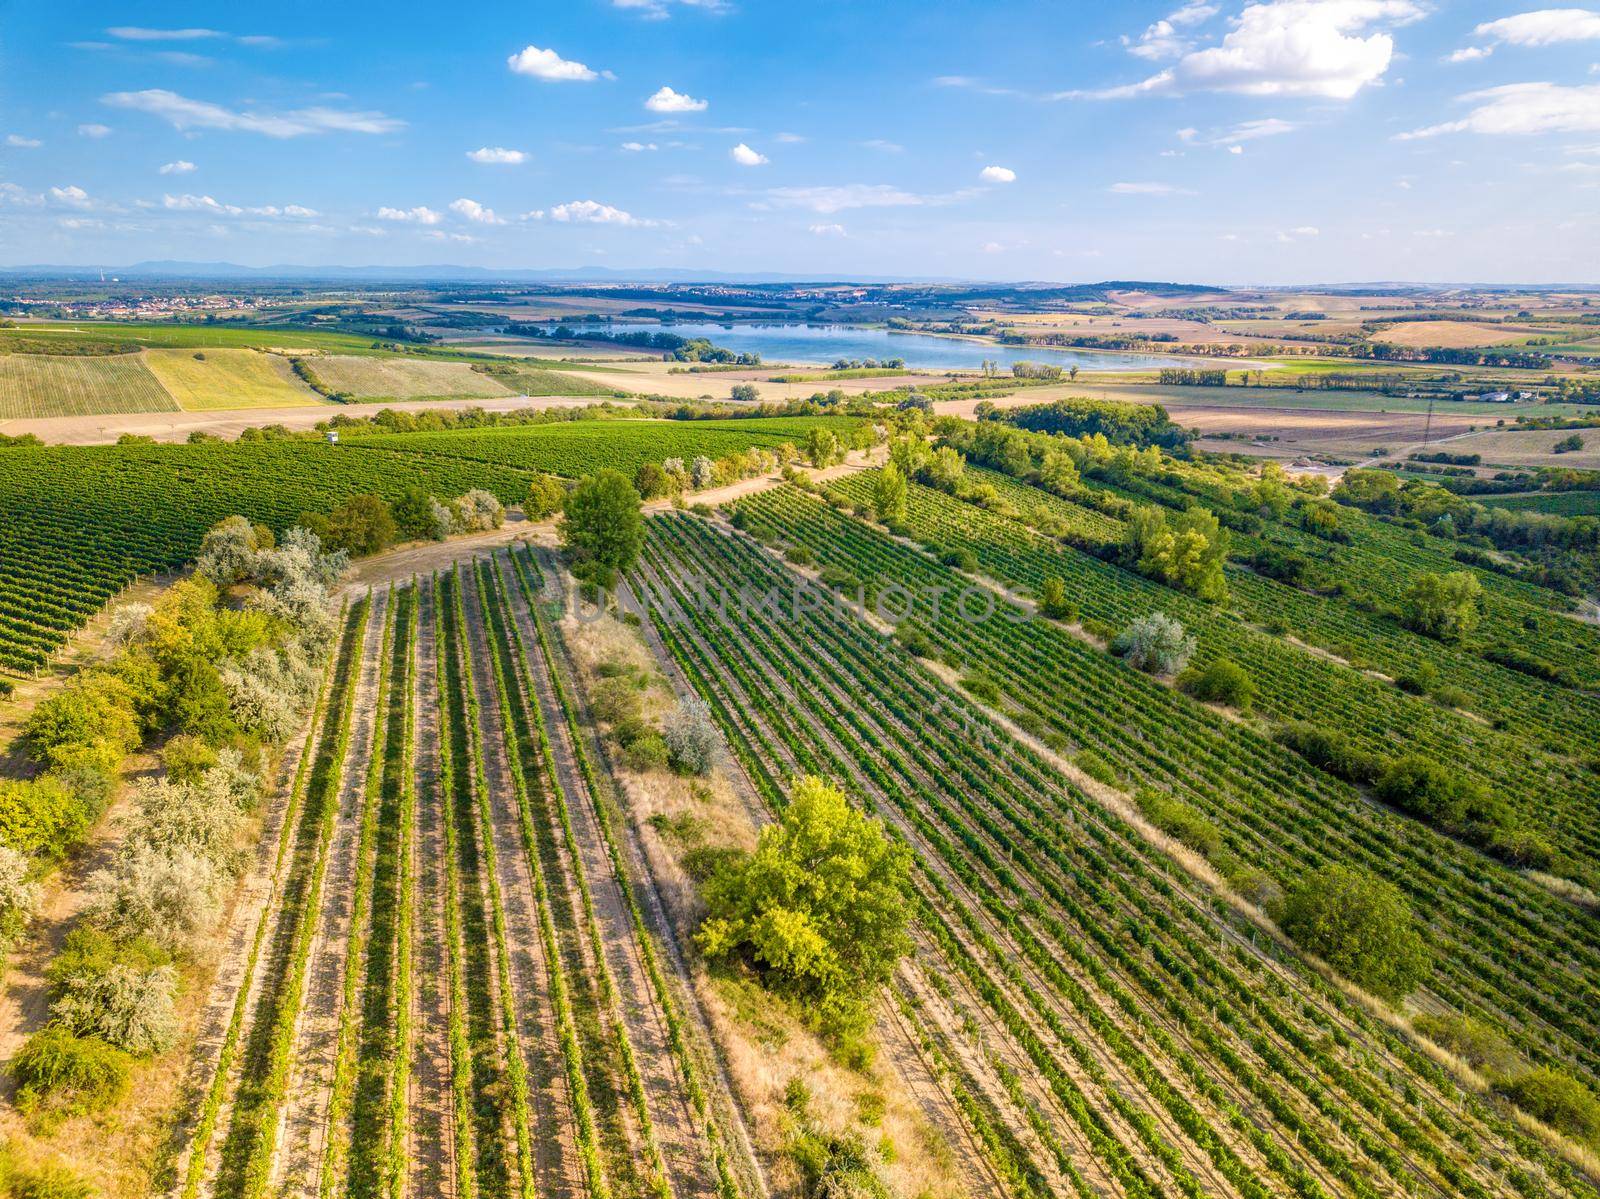 Vineyards in Palava, Czech Republic by artush